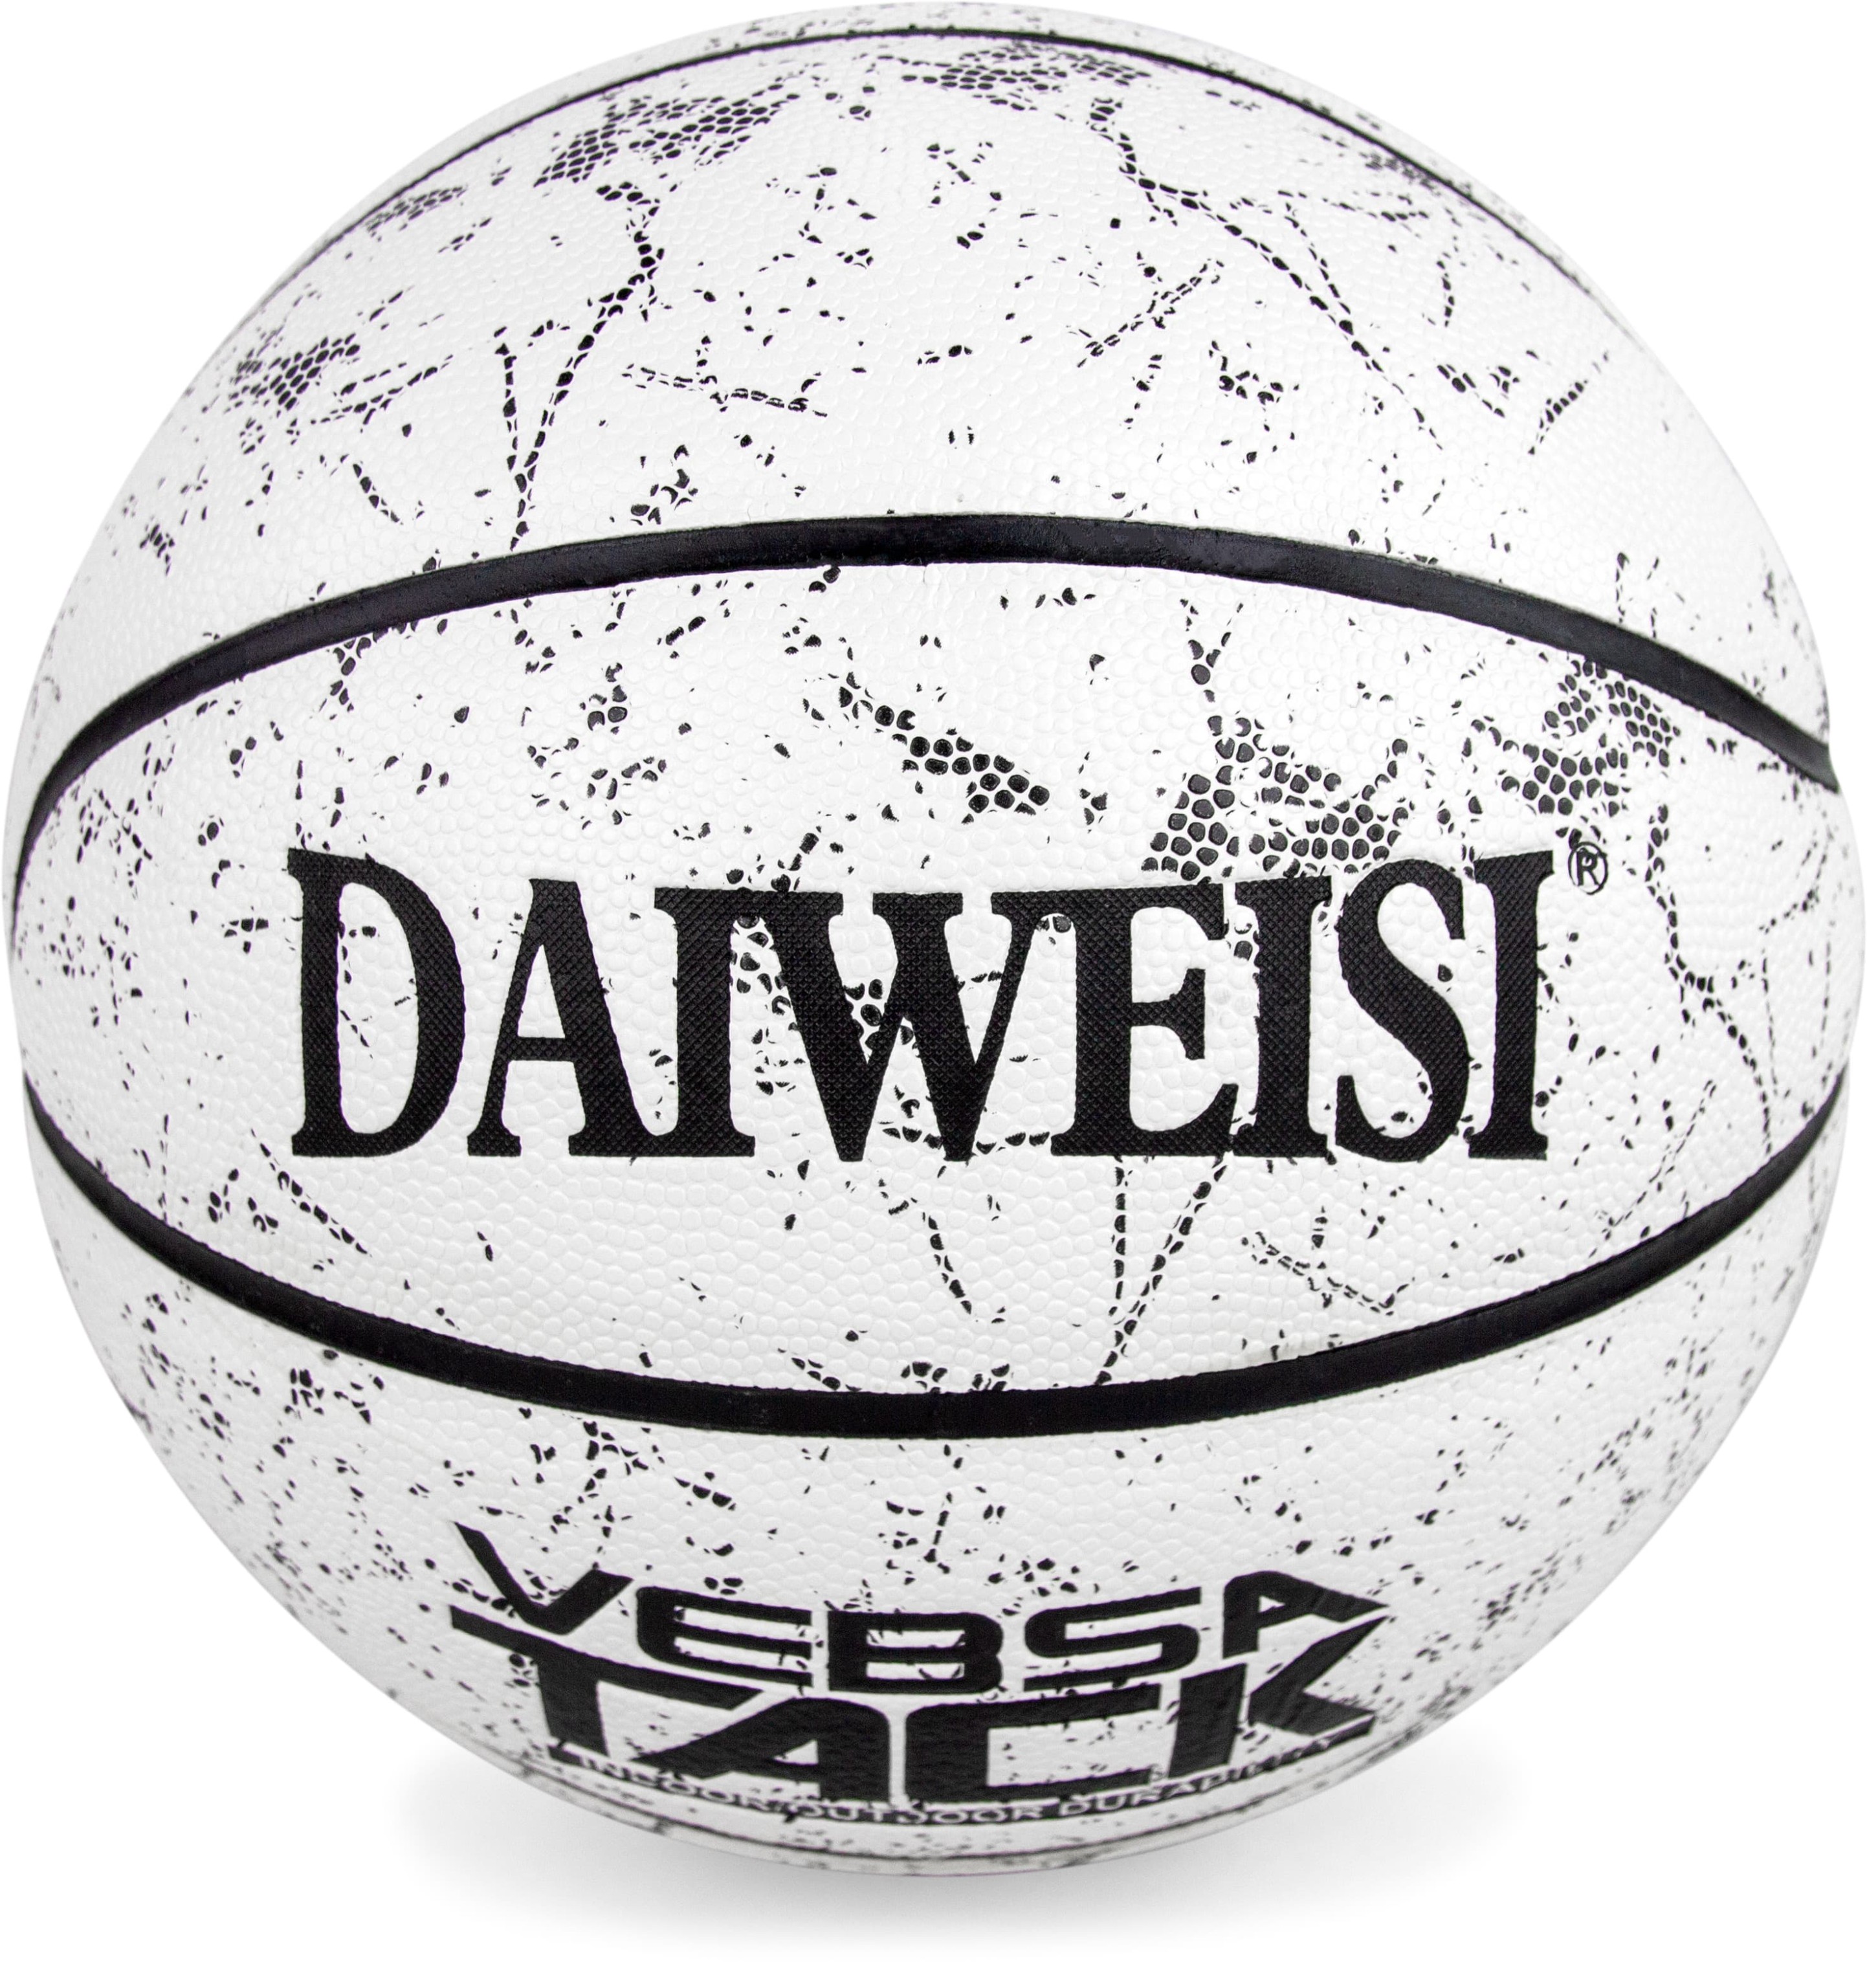 Мяч баскетбольный DaiWeisi «Vebsa Tack» 48589 / Микс